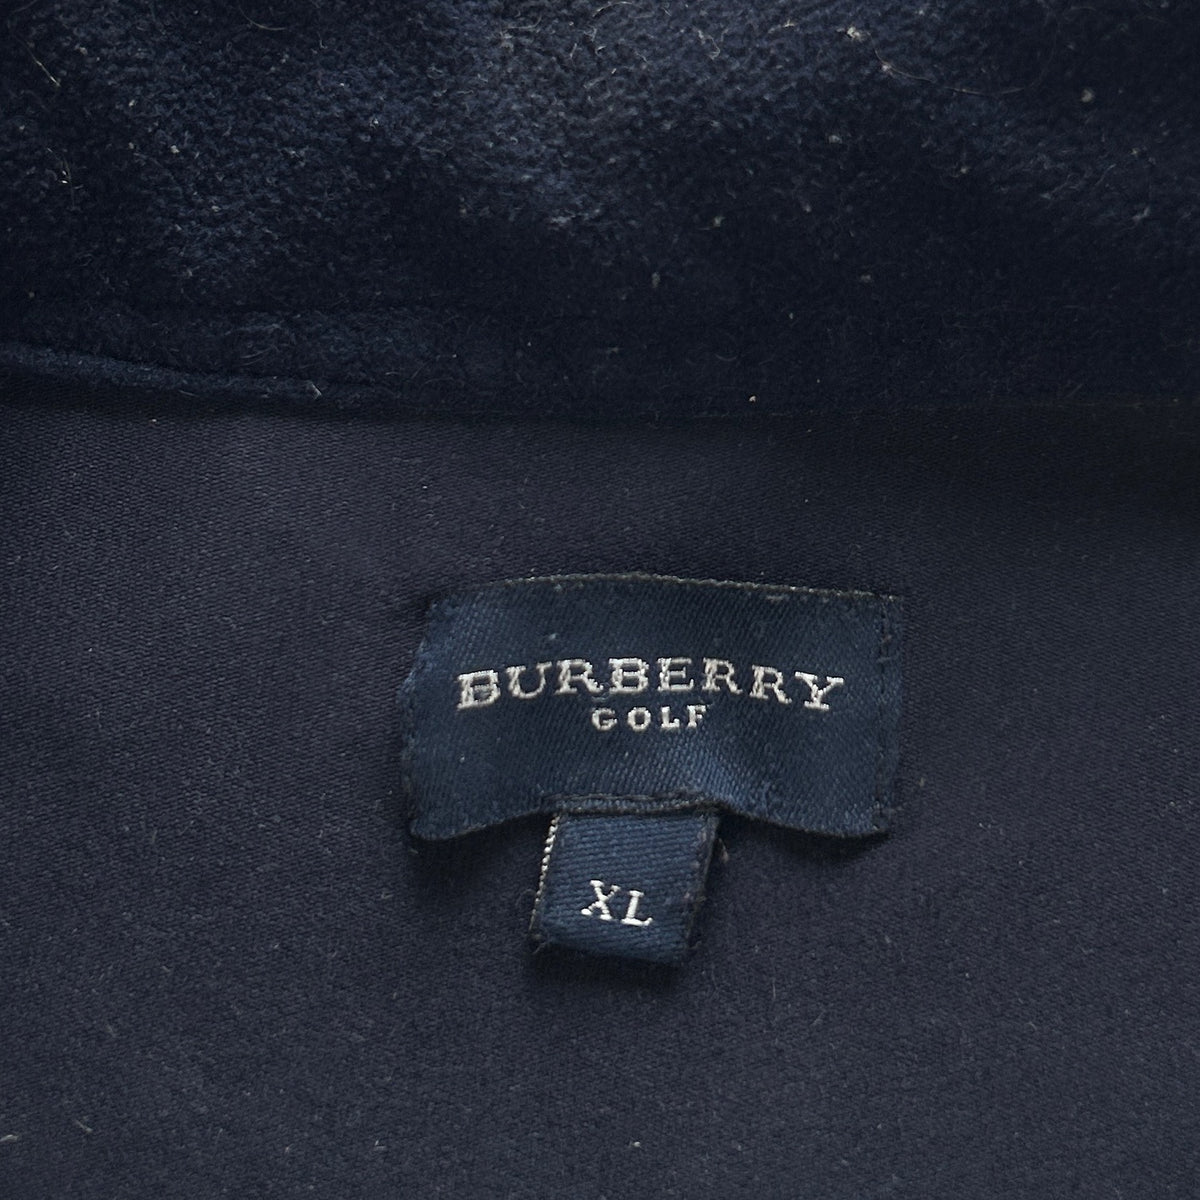 Vintage Burberry Golf Q Zip Fleece Size L